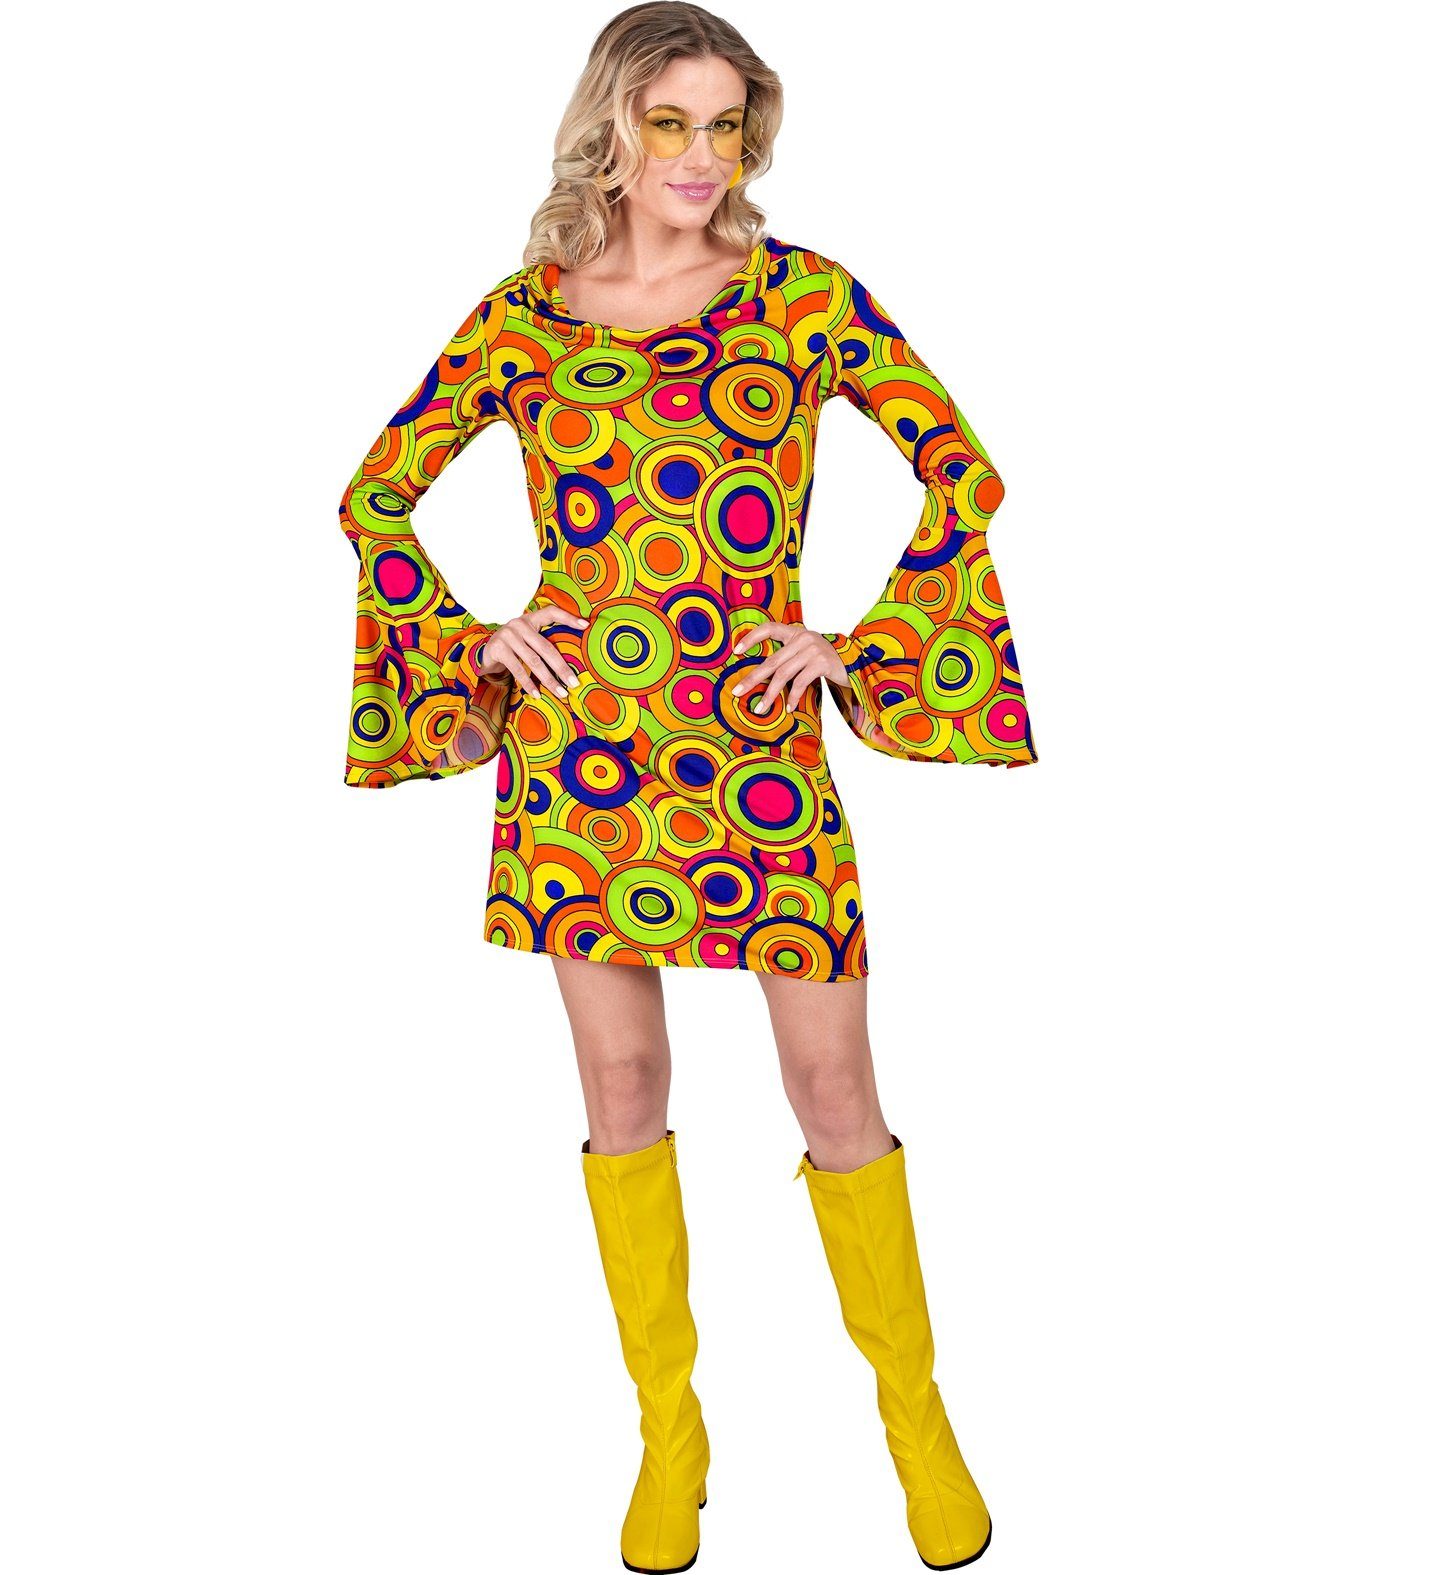 Widmann S.r.l. Kostüm 70er Jahre Damen Kleid 'Yellow Circles', Mehrfarb